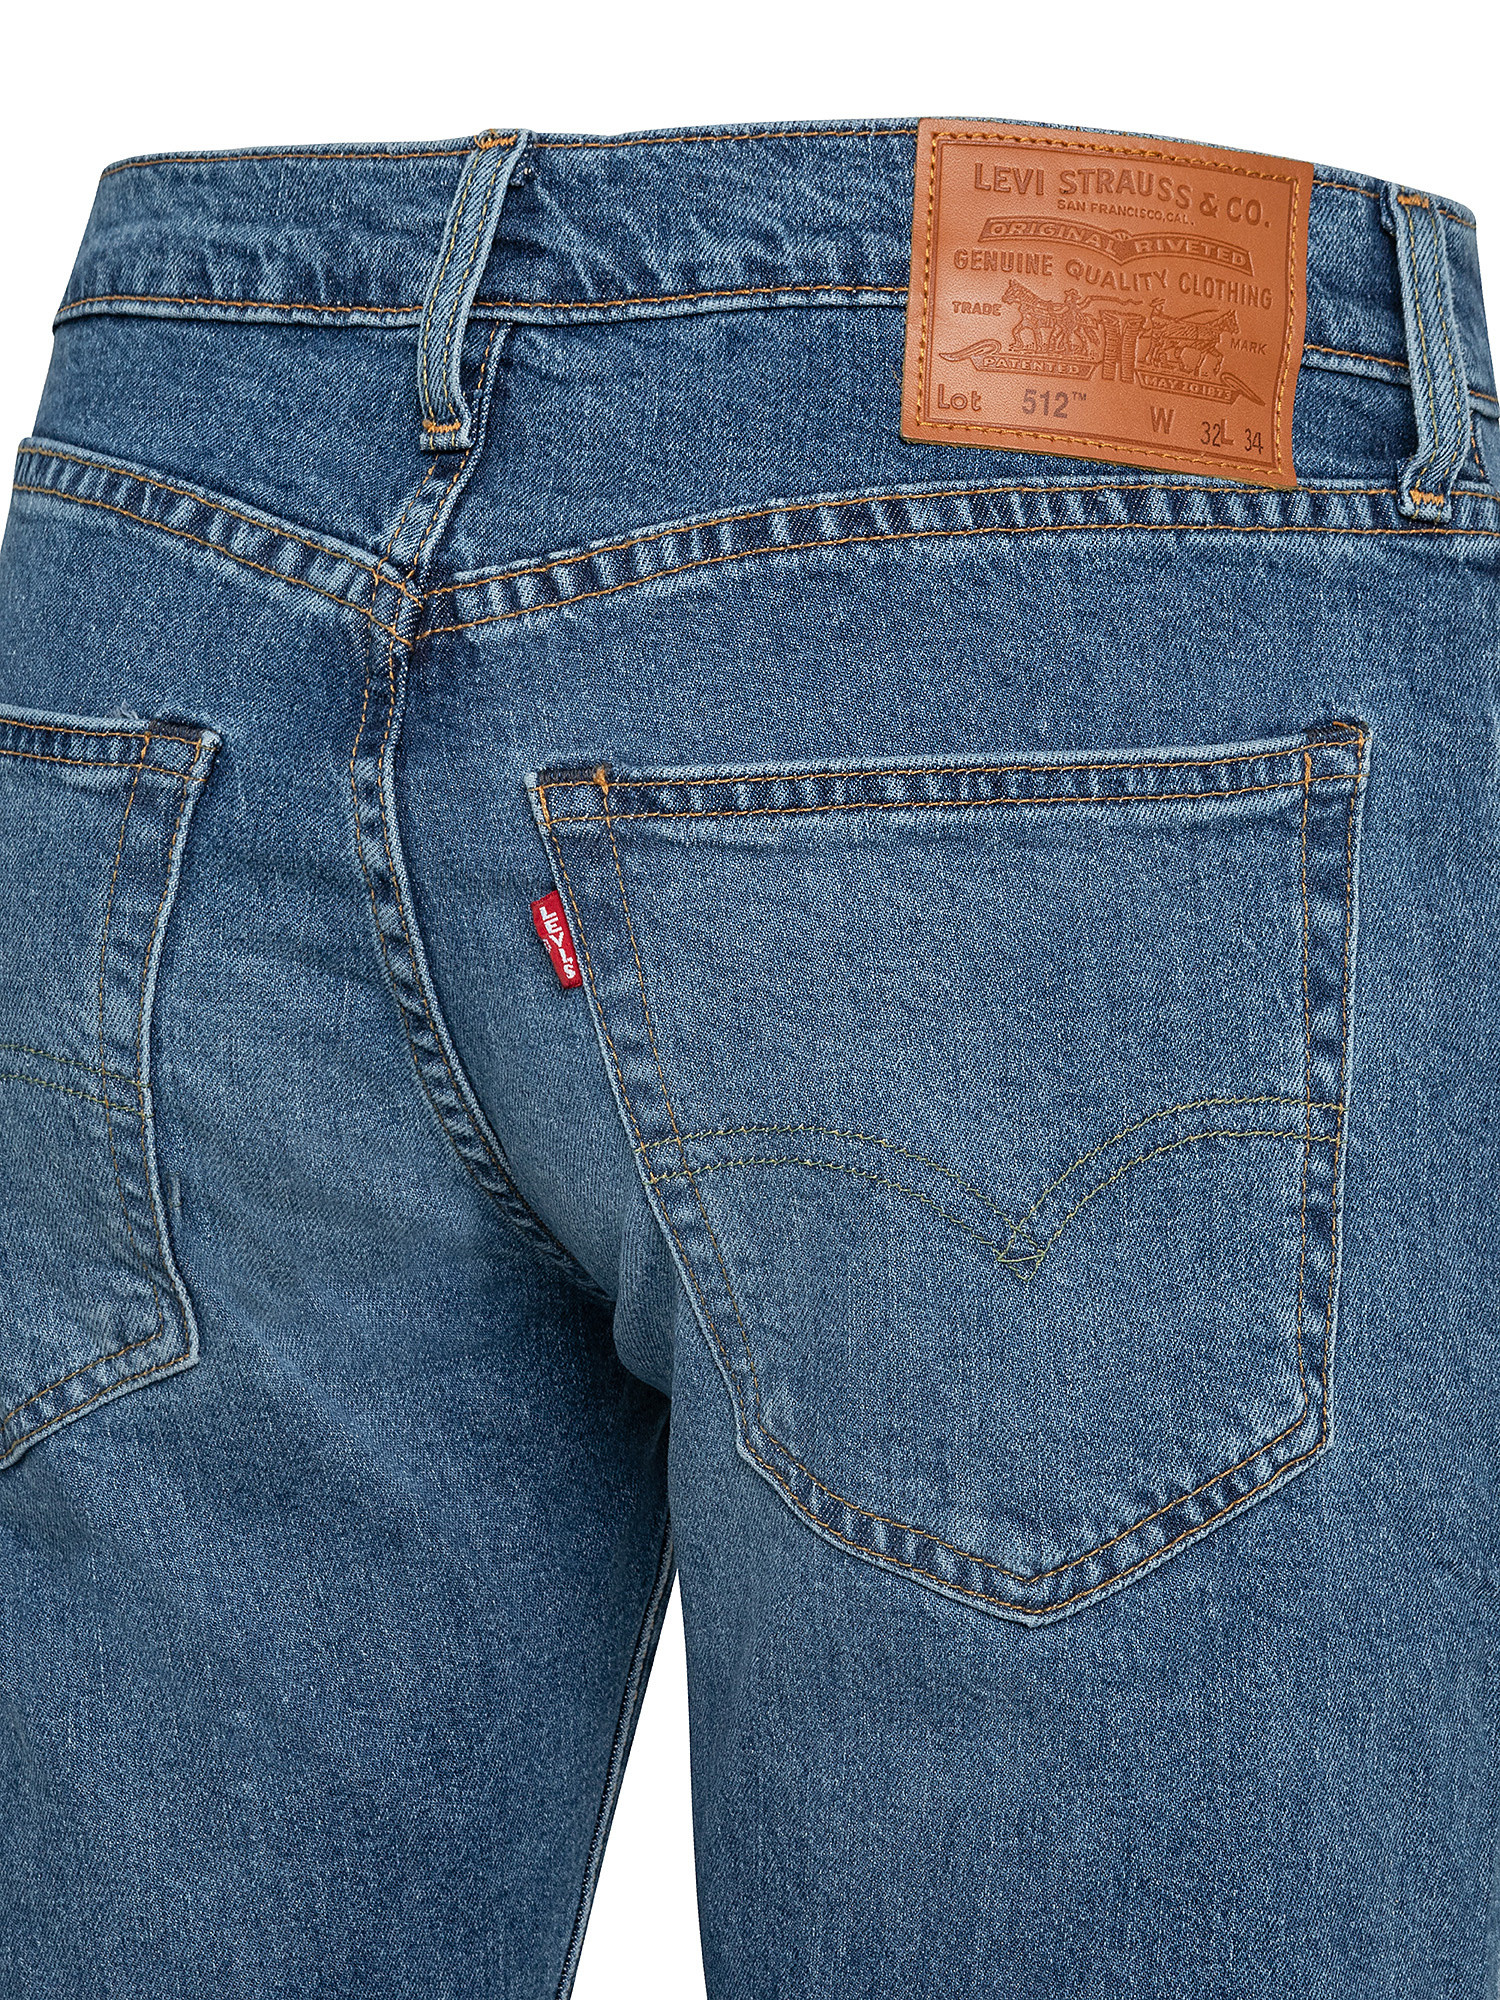 551Z Straight crop jeans, Blue, large image number 2